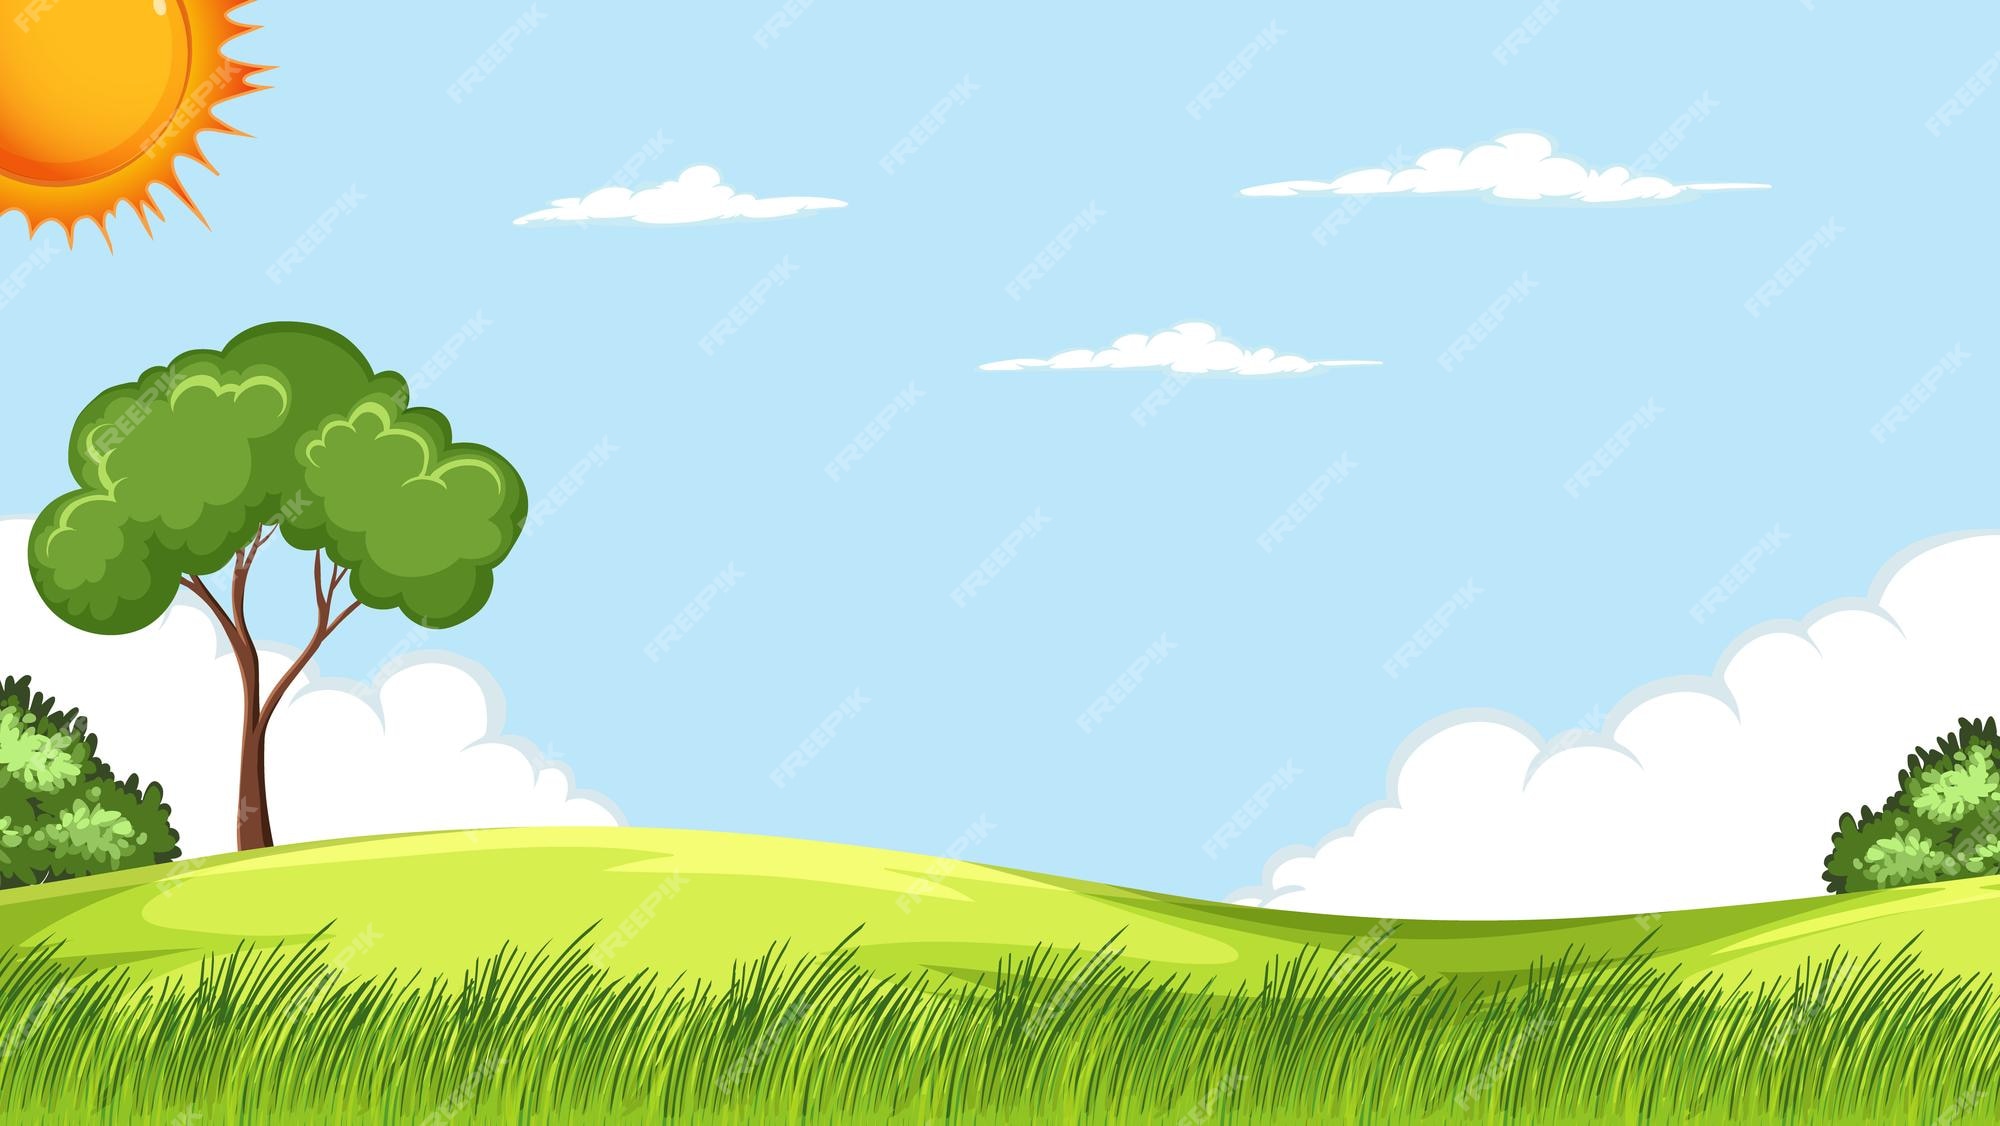 Grass Field Cartoon Images - Free Download on Freepik